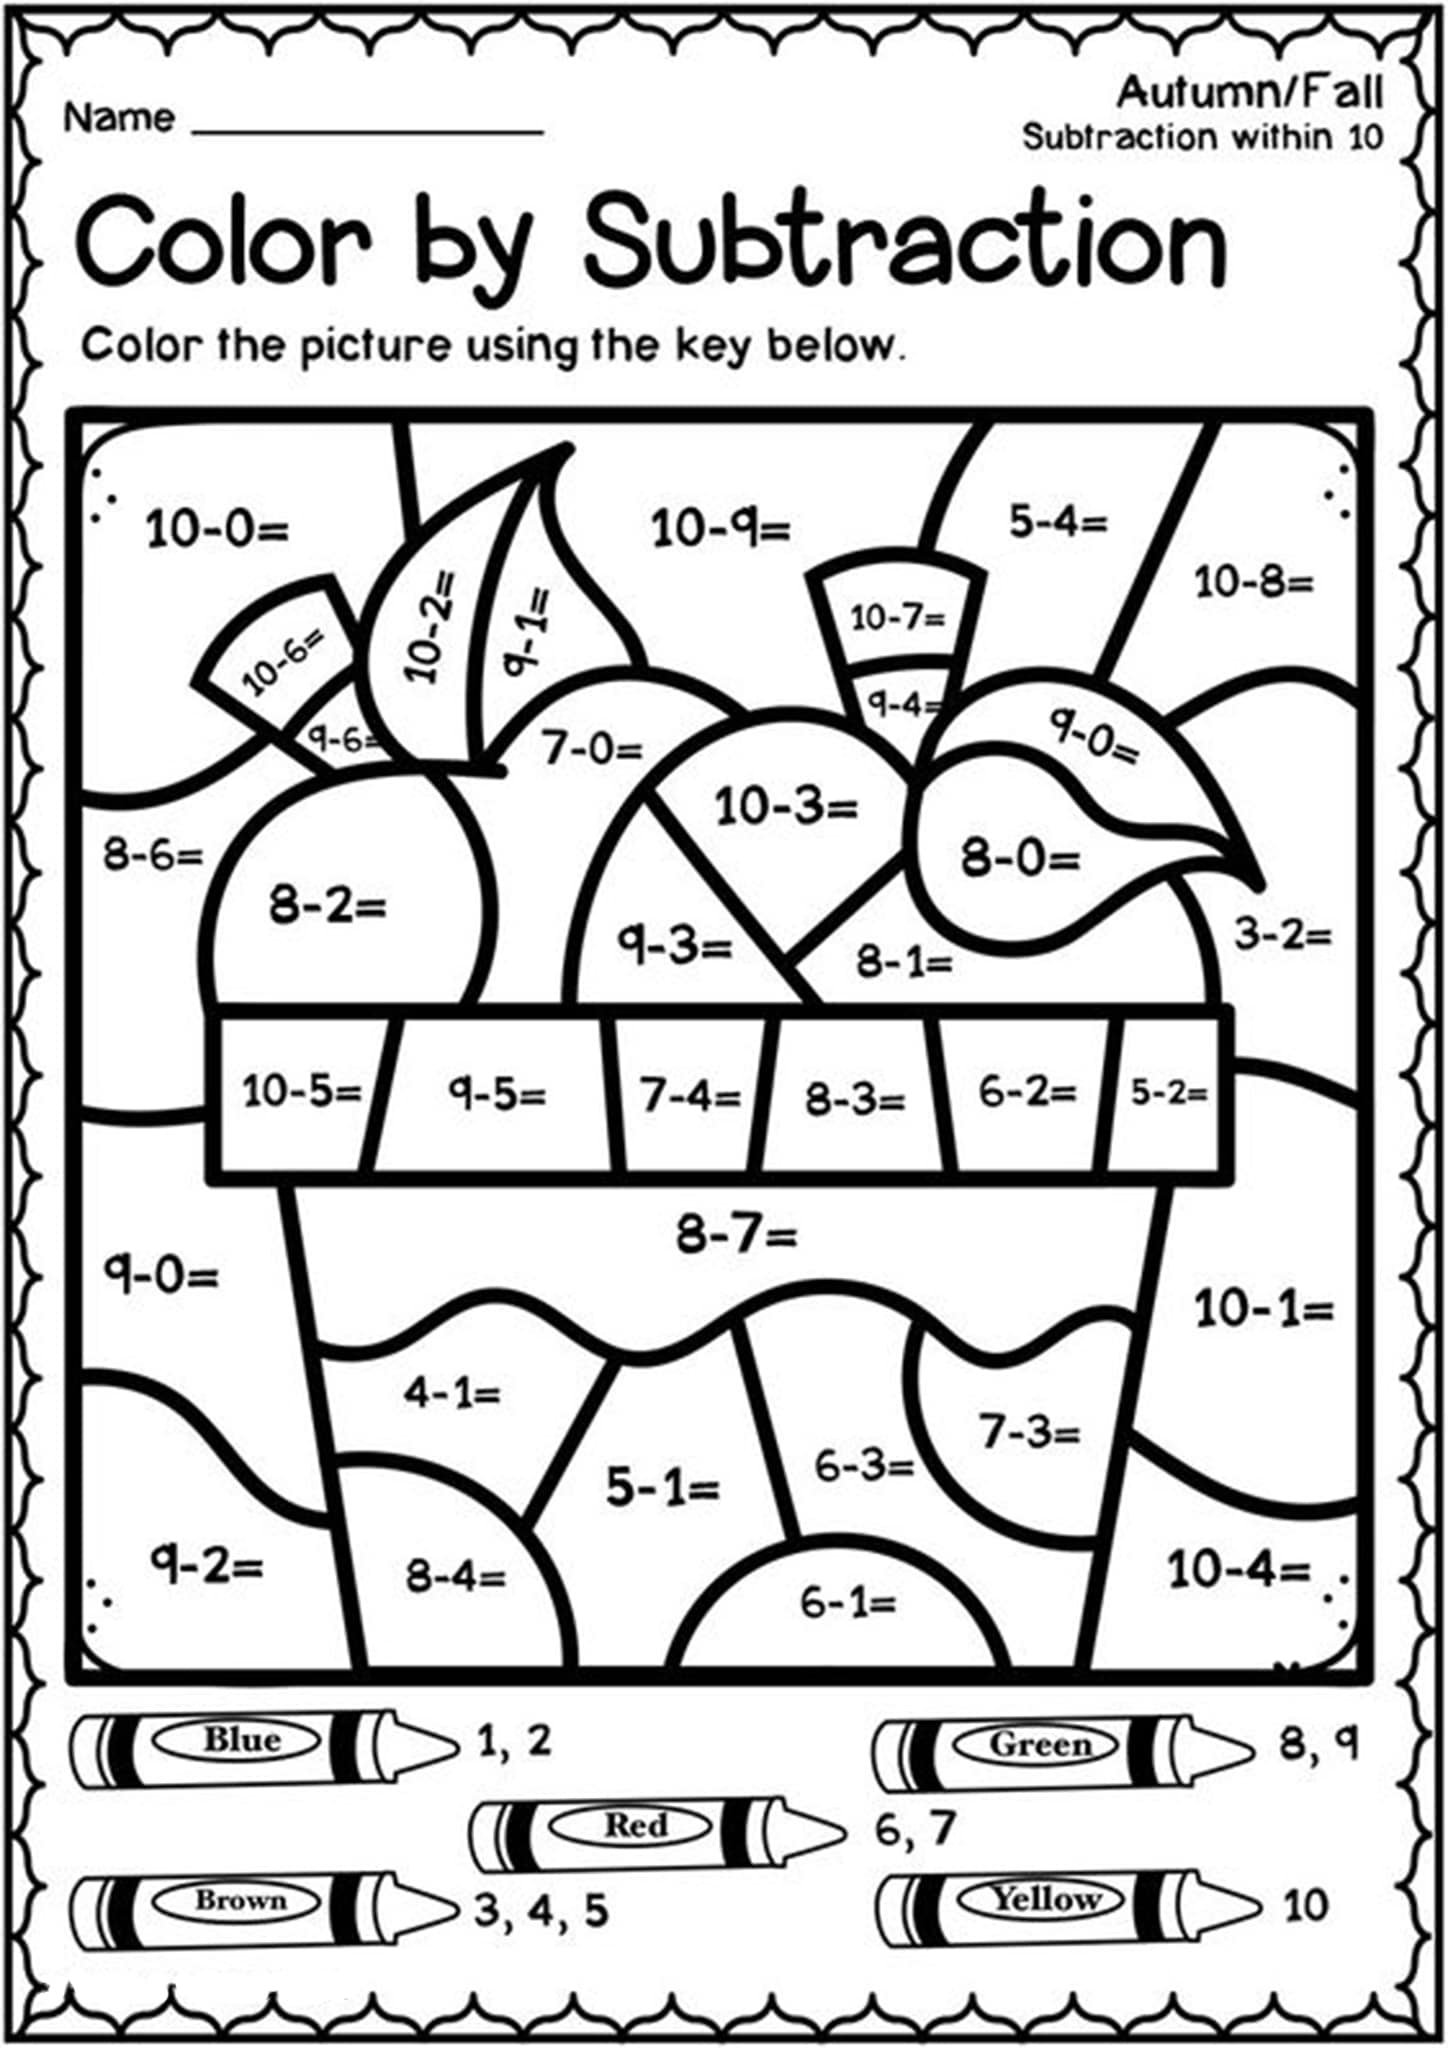 Printable Color By Number For Kindergarten